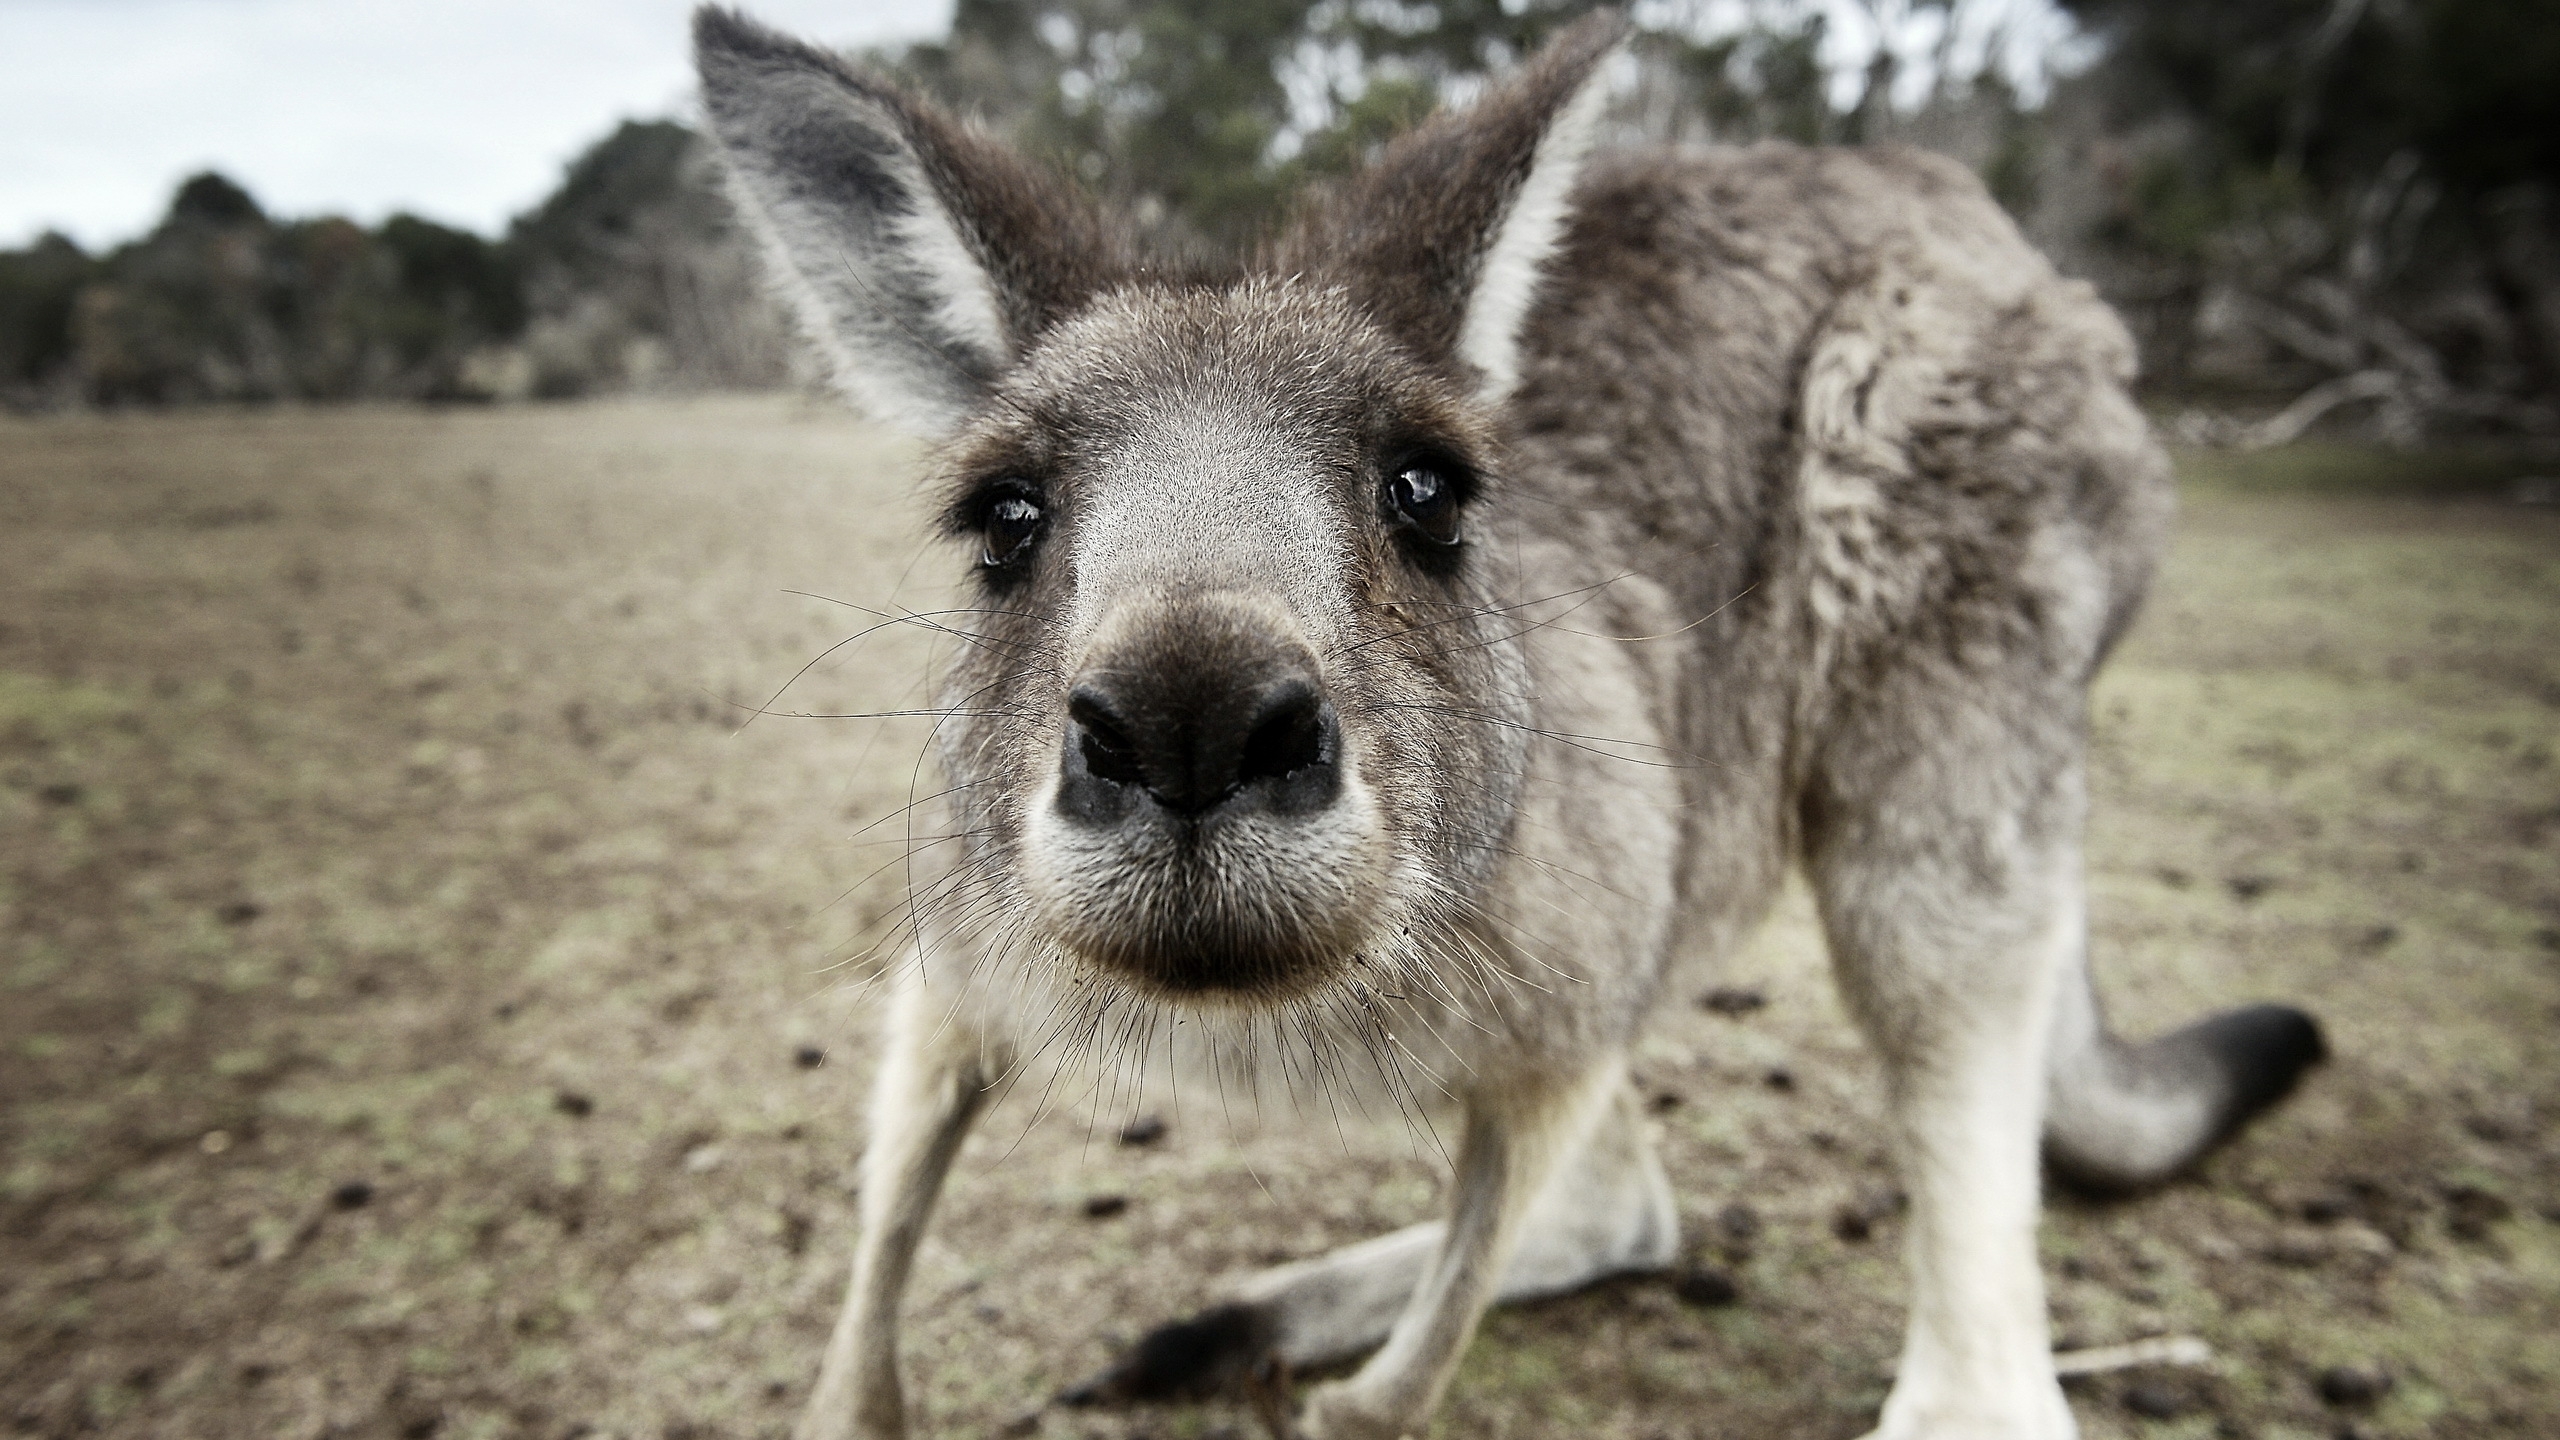 Kangaroo Close Up for 2560x1440 HDTV resolution